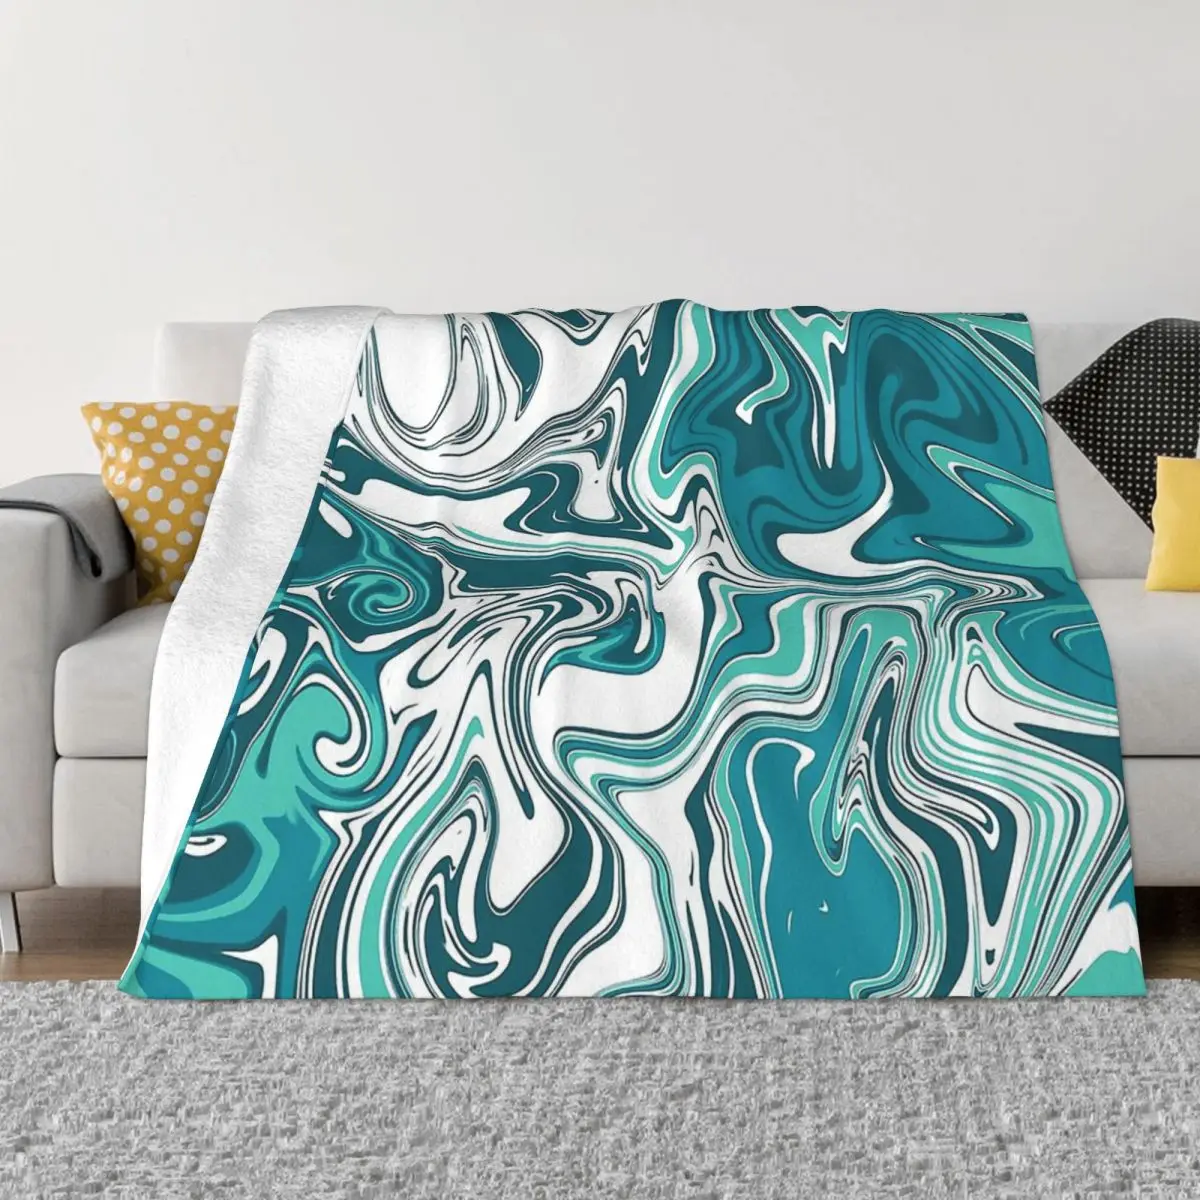 

Marbling Marbled Marble Pattern Blanket Flannel Cool Design Inspired By Blue Ocean Cozy Soft FLeece Bedspread